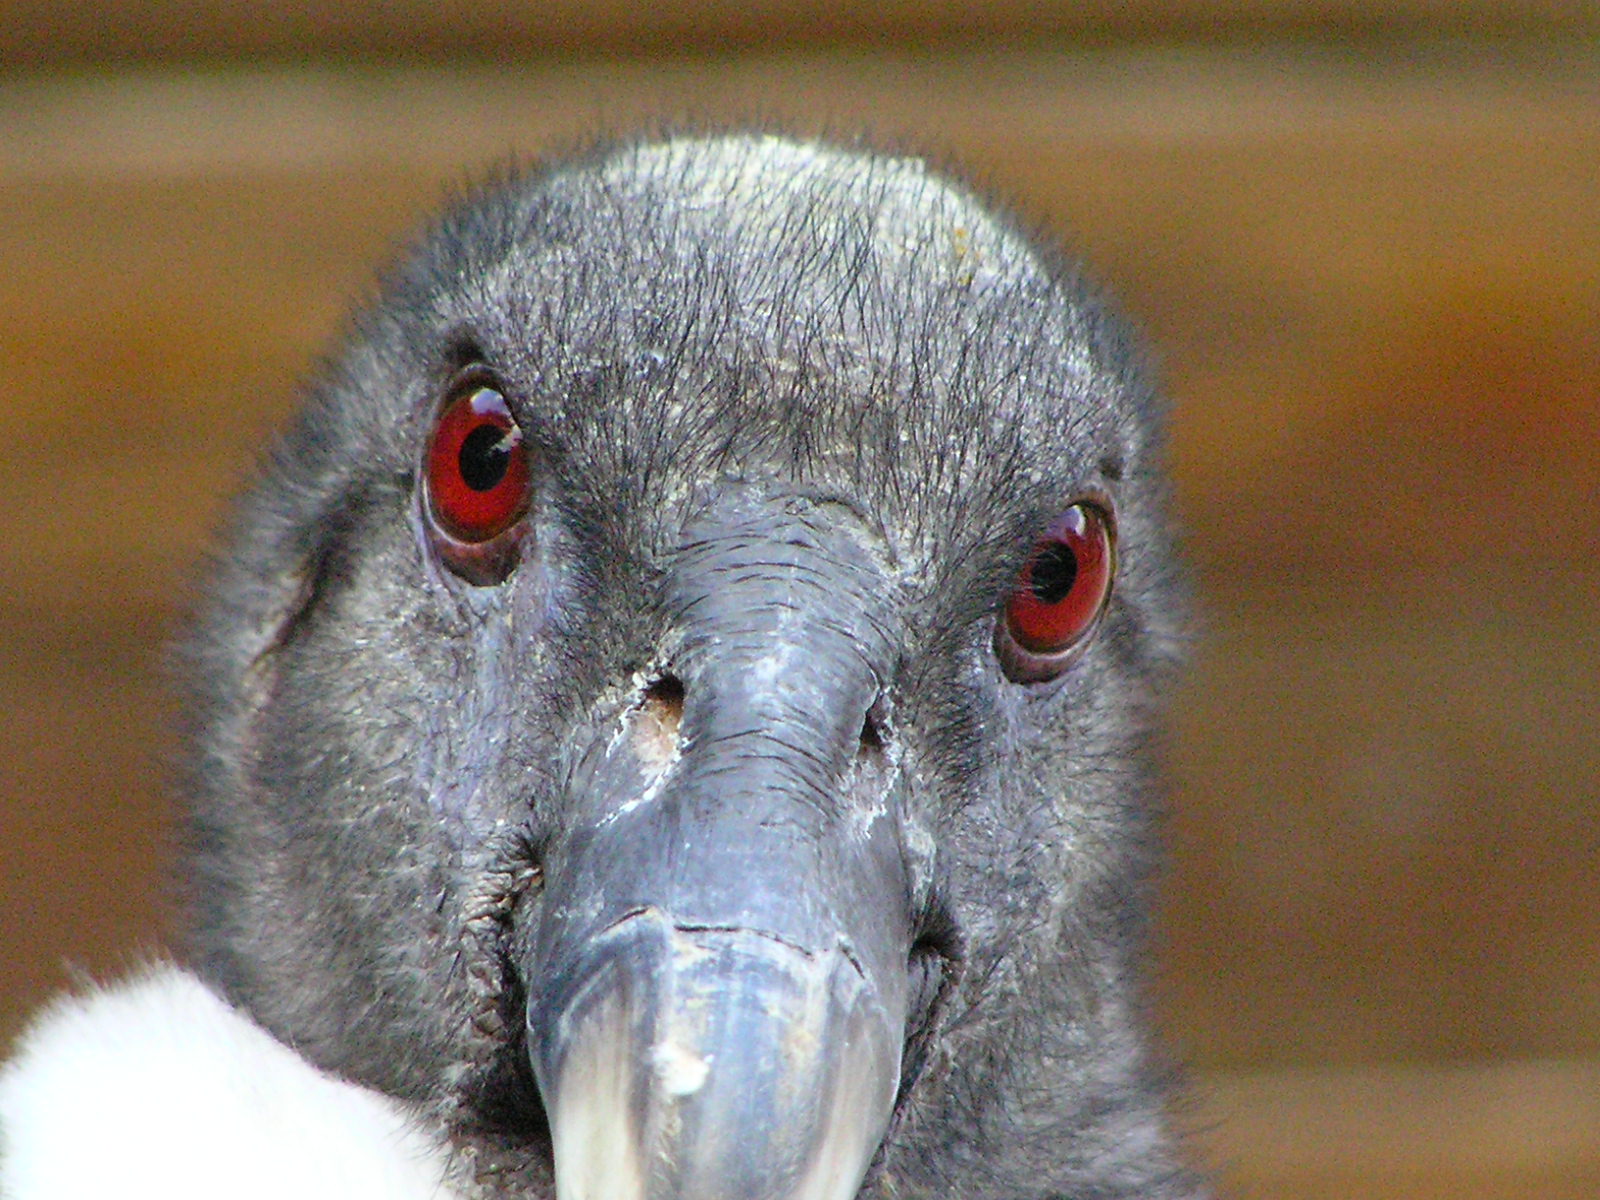 a closeup image of a bird's red eyes